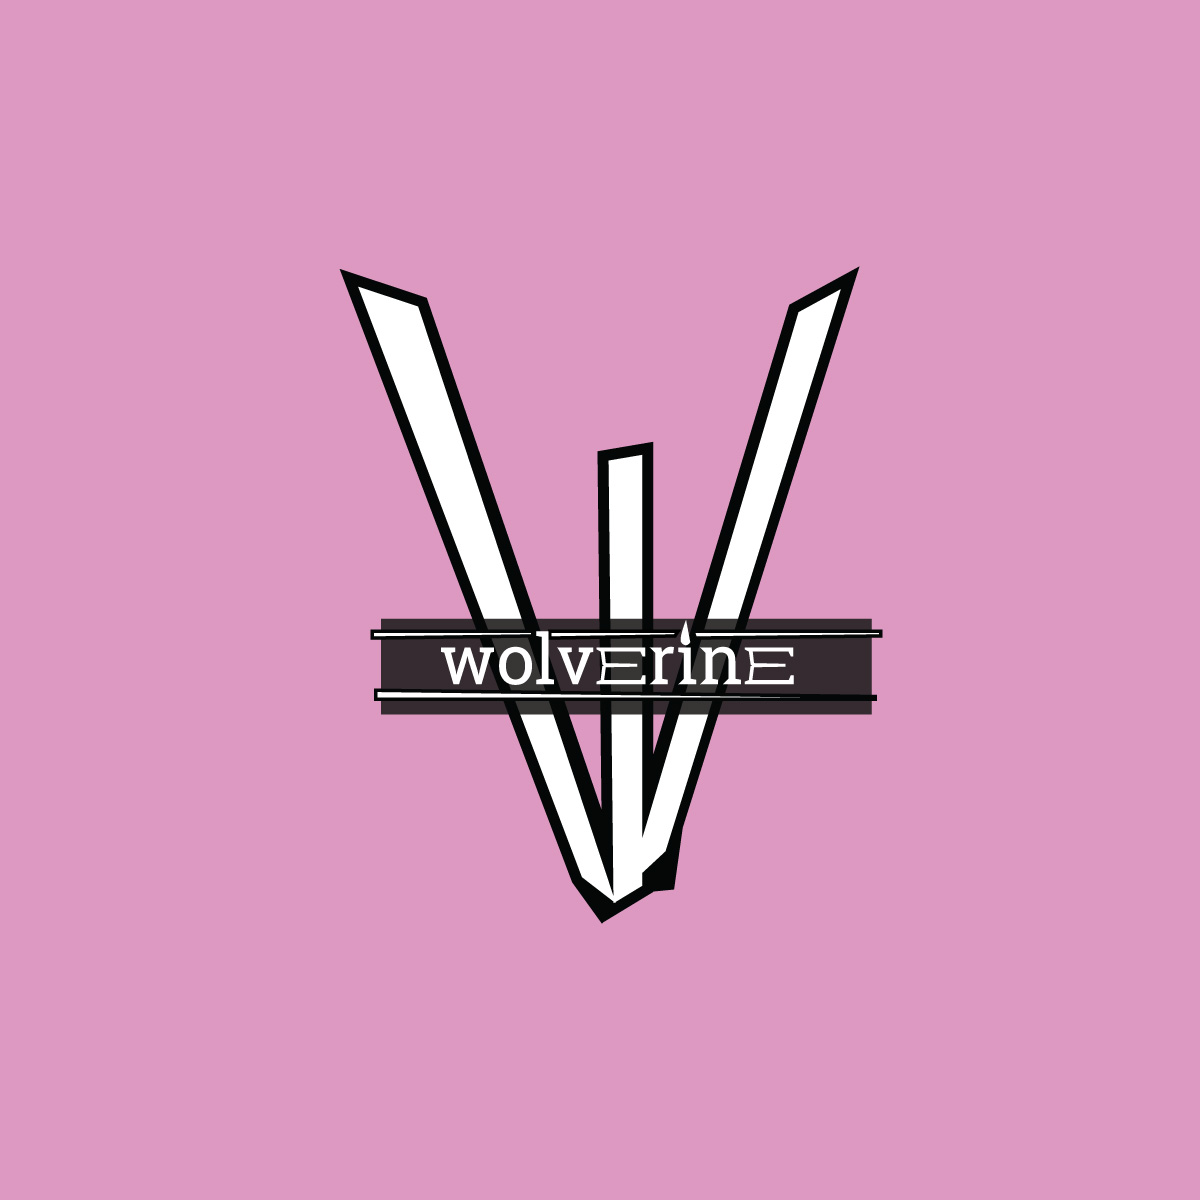 Wolverine Concepts typographic logo